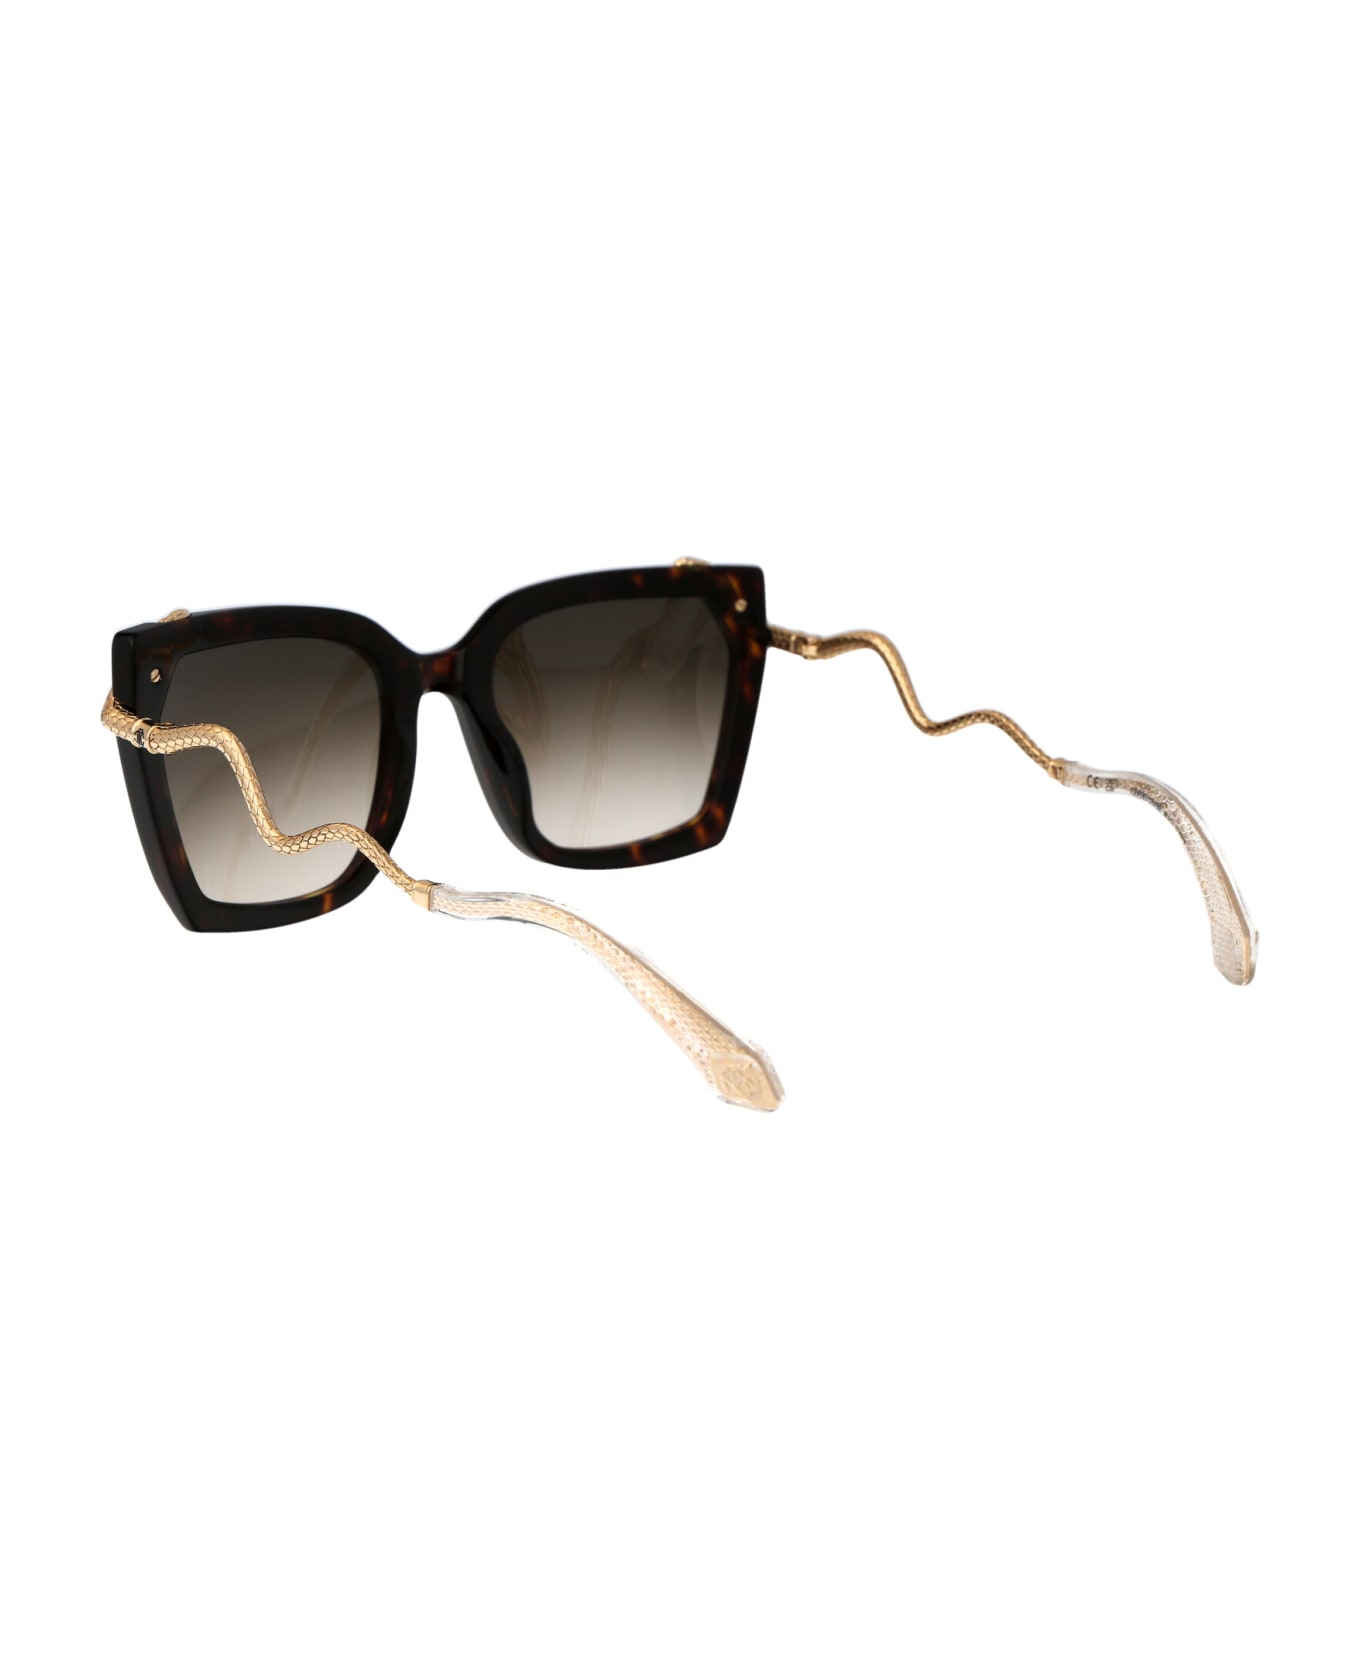 Roberto Cavalli Src034m Sunglasses - 0743 BROWN